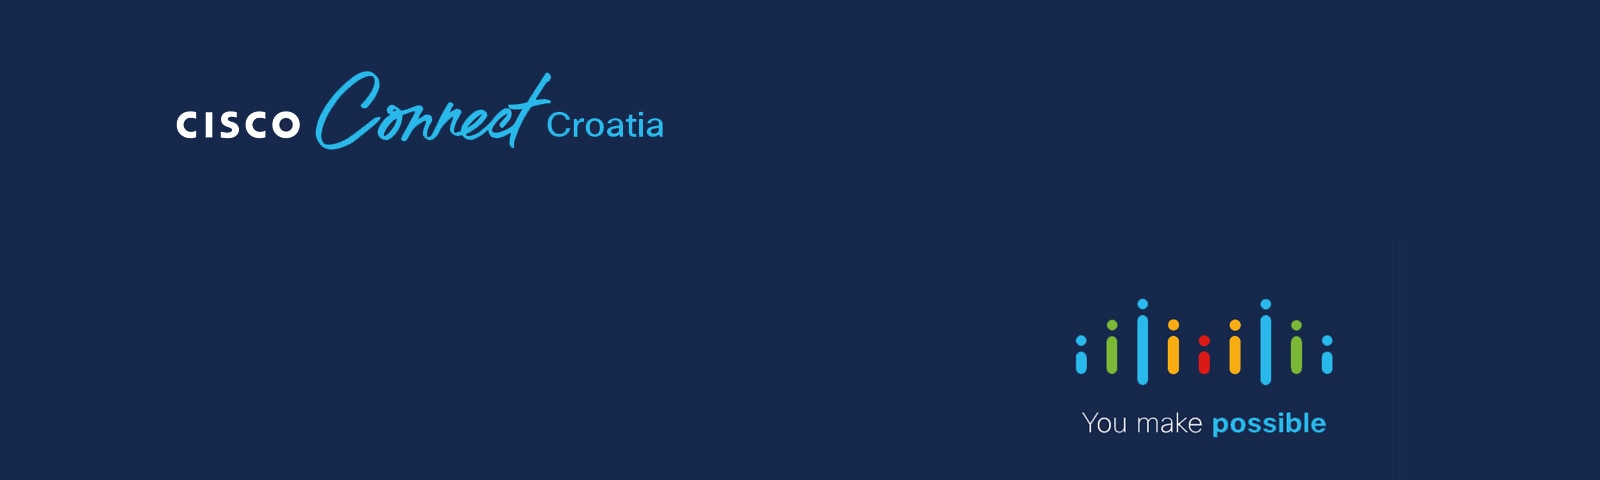 cisco-connect-croatia-1600x480